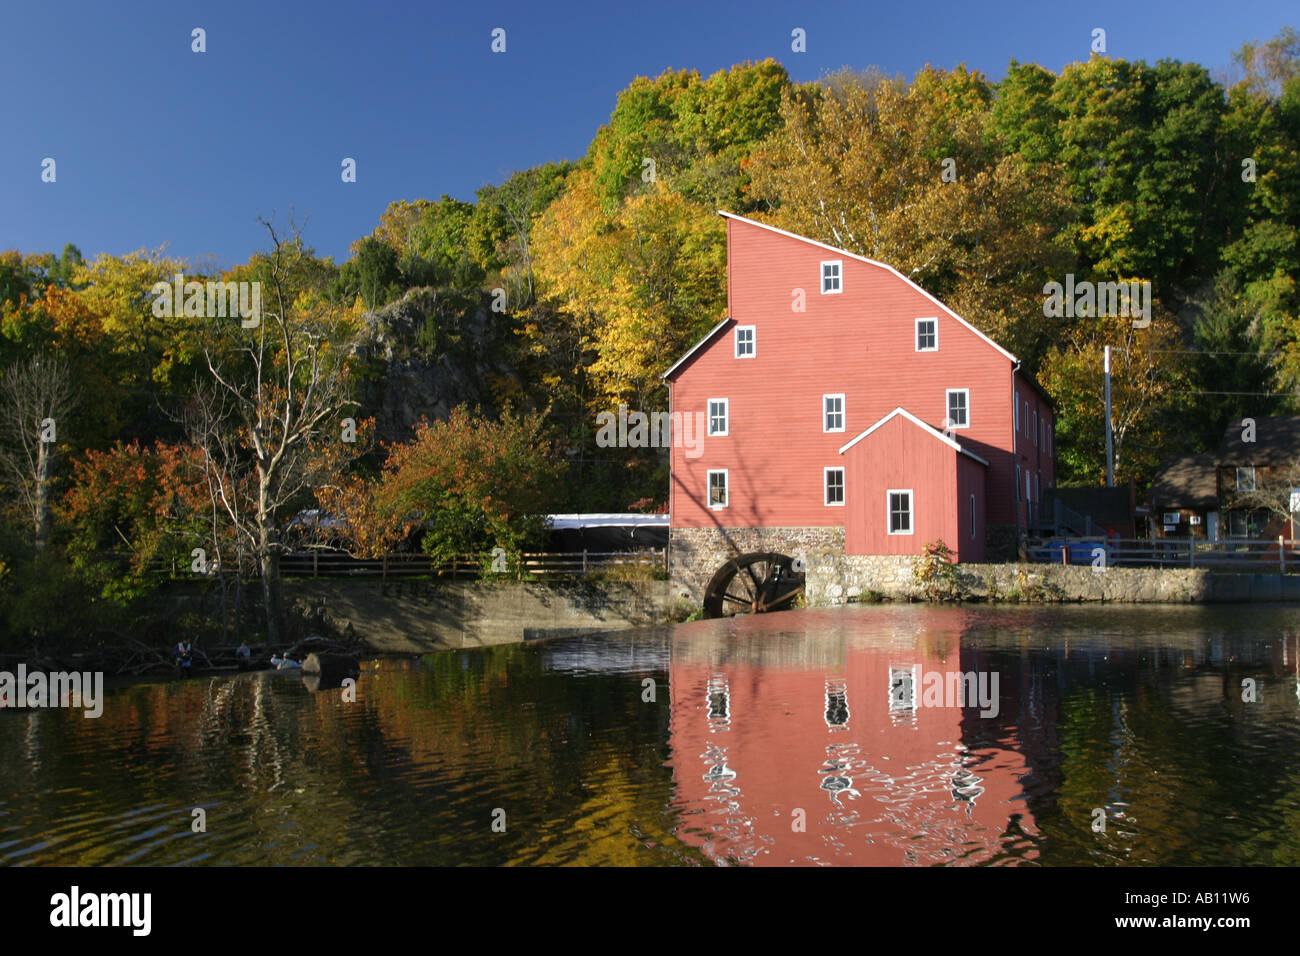 Clinton's landmark Red Mill, located in Hunterdon County, New Jersey, U.S.A. Stock Photo